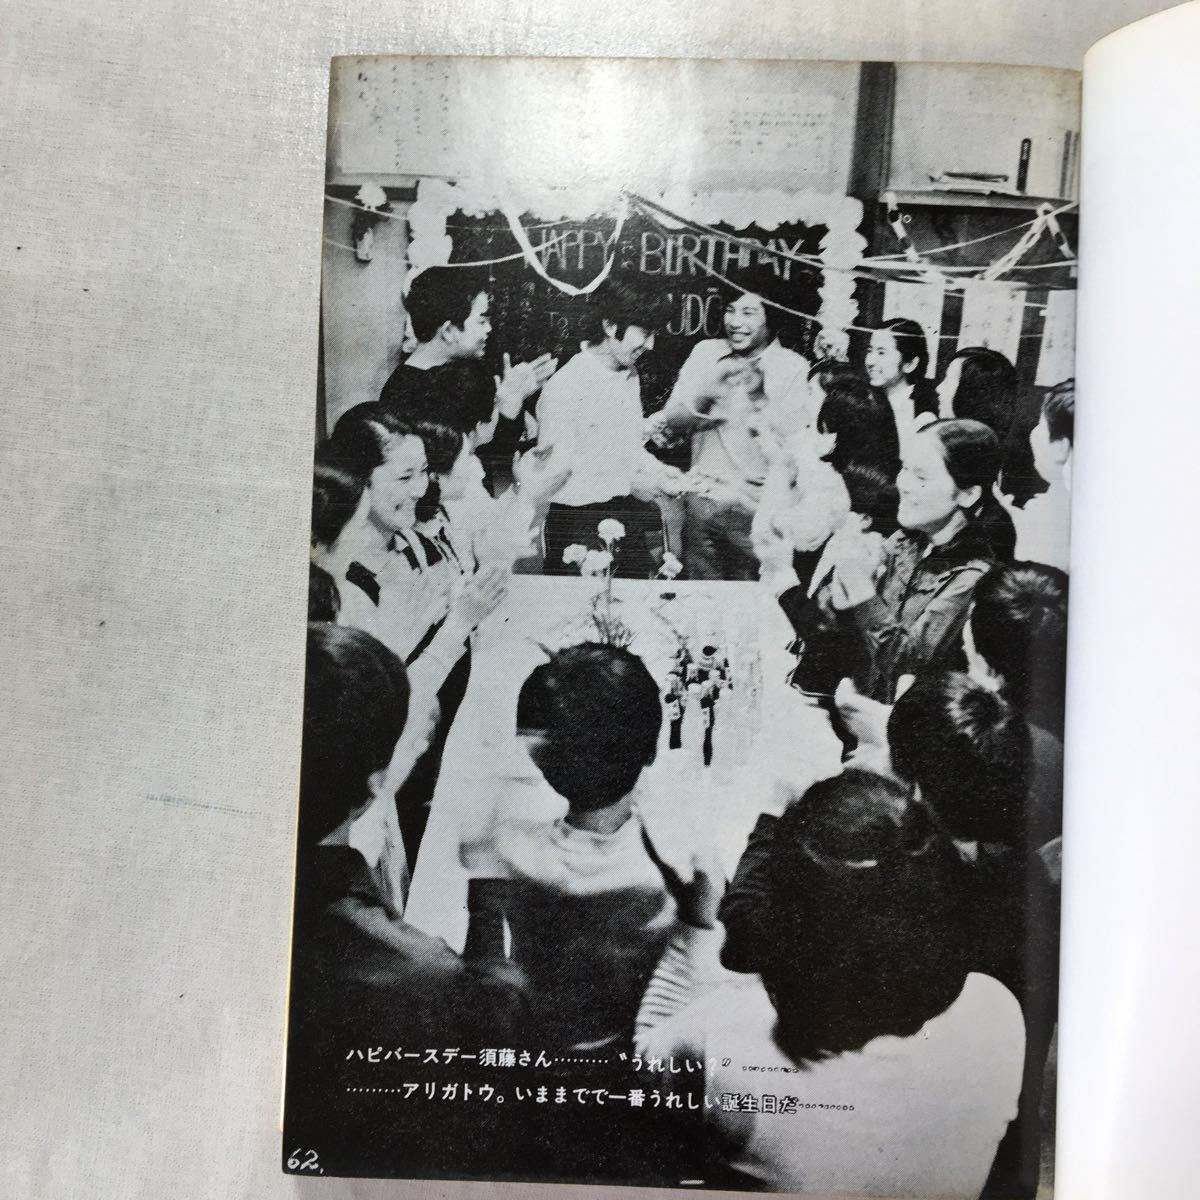 zaa-431♪どぶ川学級 続―ボクたちここで跳んだ 単行本 須長 茂夫 (著) 旬報社 (1973/8/1)著者サイン入り